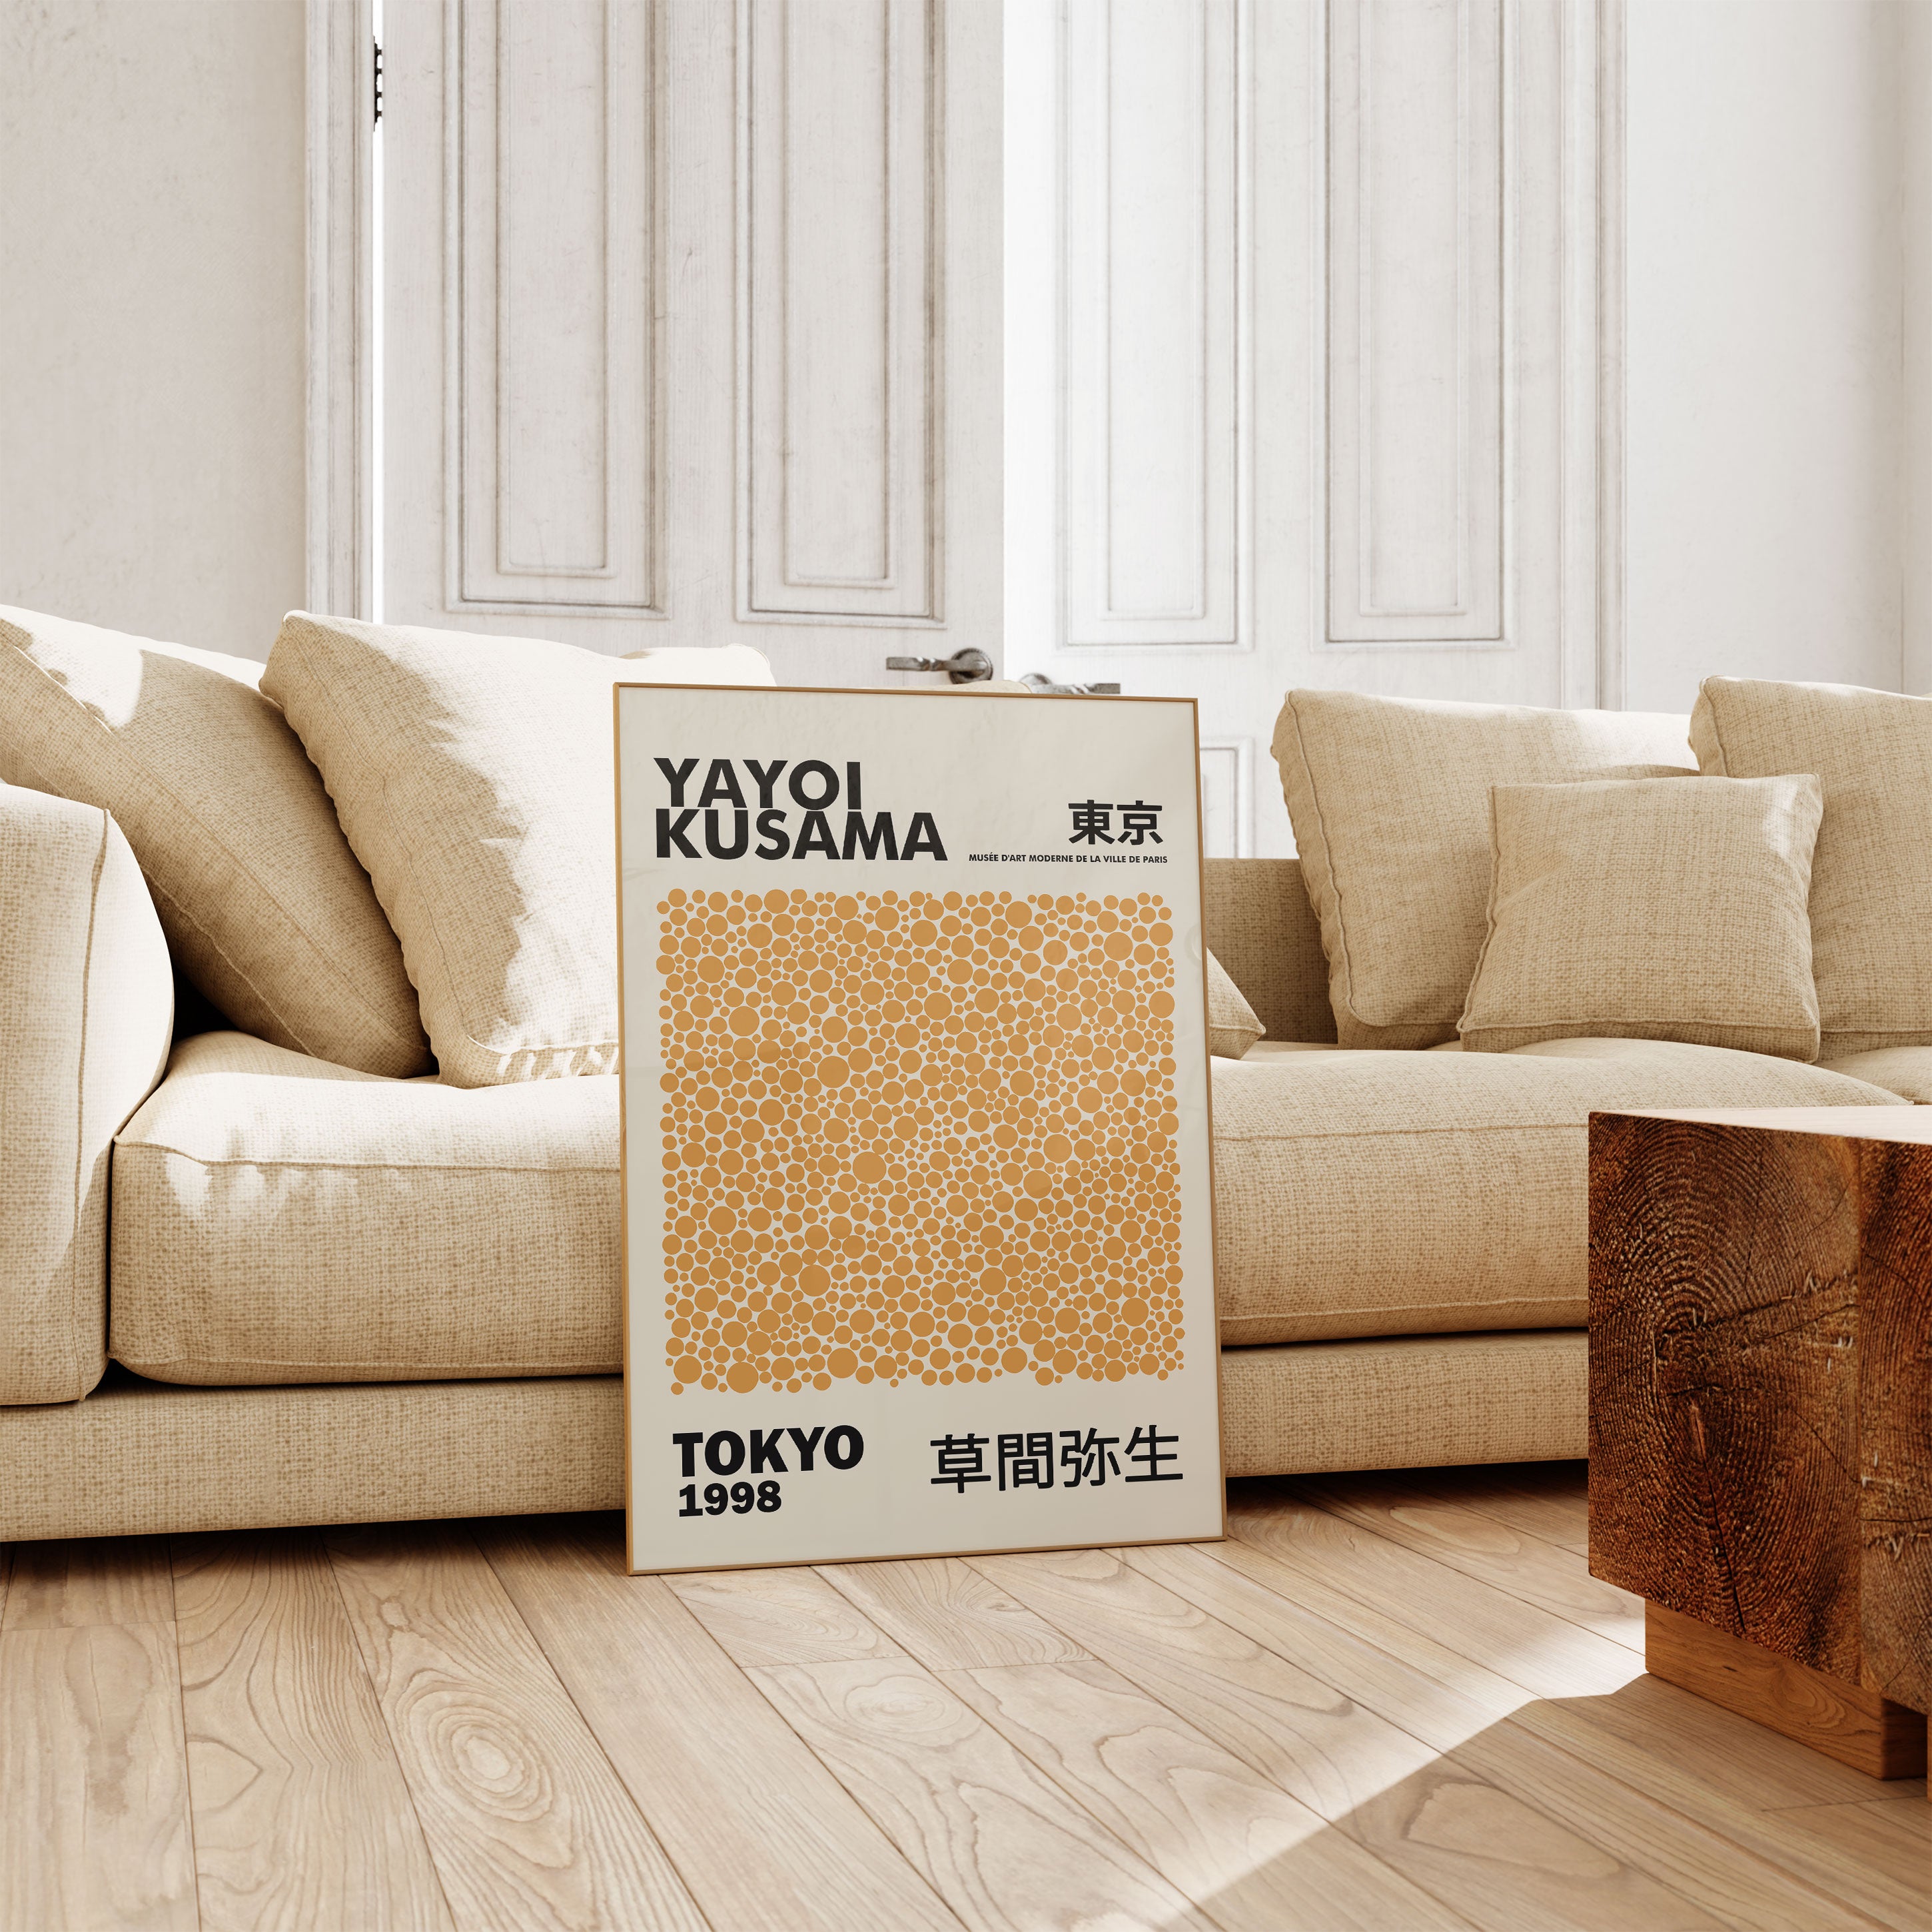 Yayoi Kusama - Mustard Dots 2